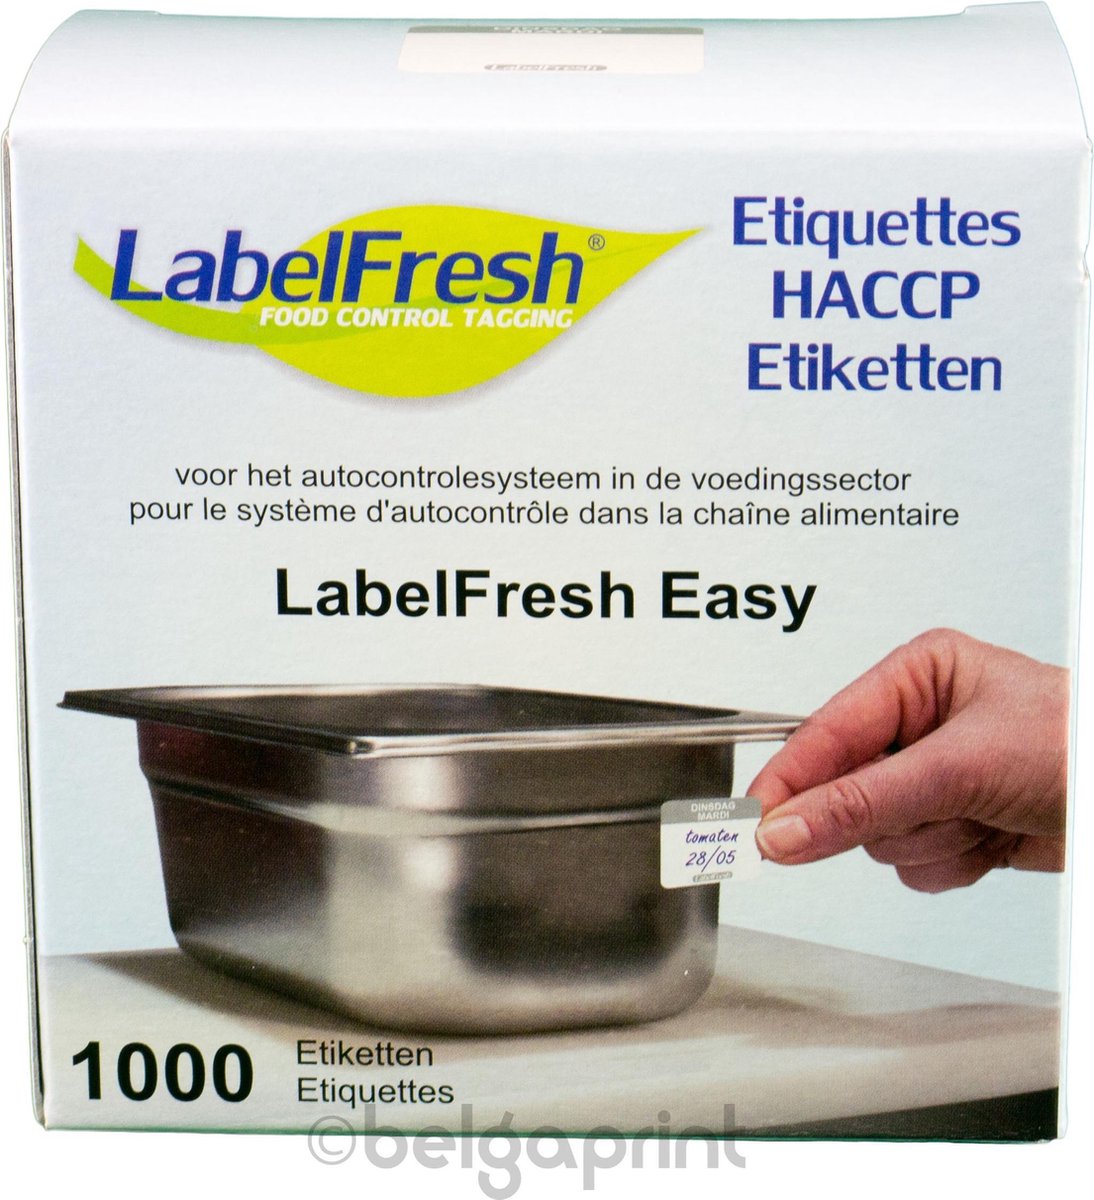 1000 LabelFresh Easy - 30x25 mm - dinsdag-mardi - HACCP etiketten / stickers